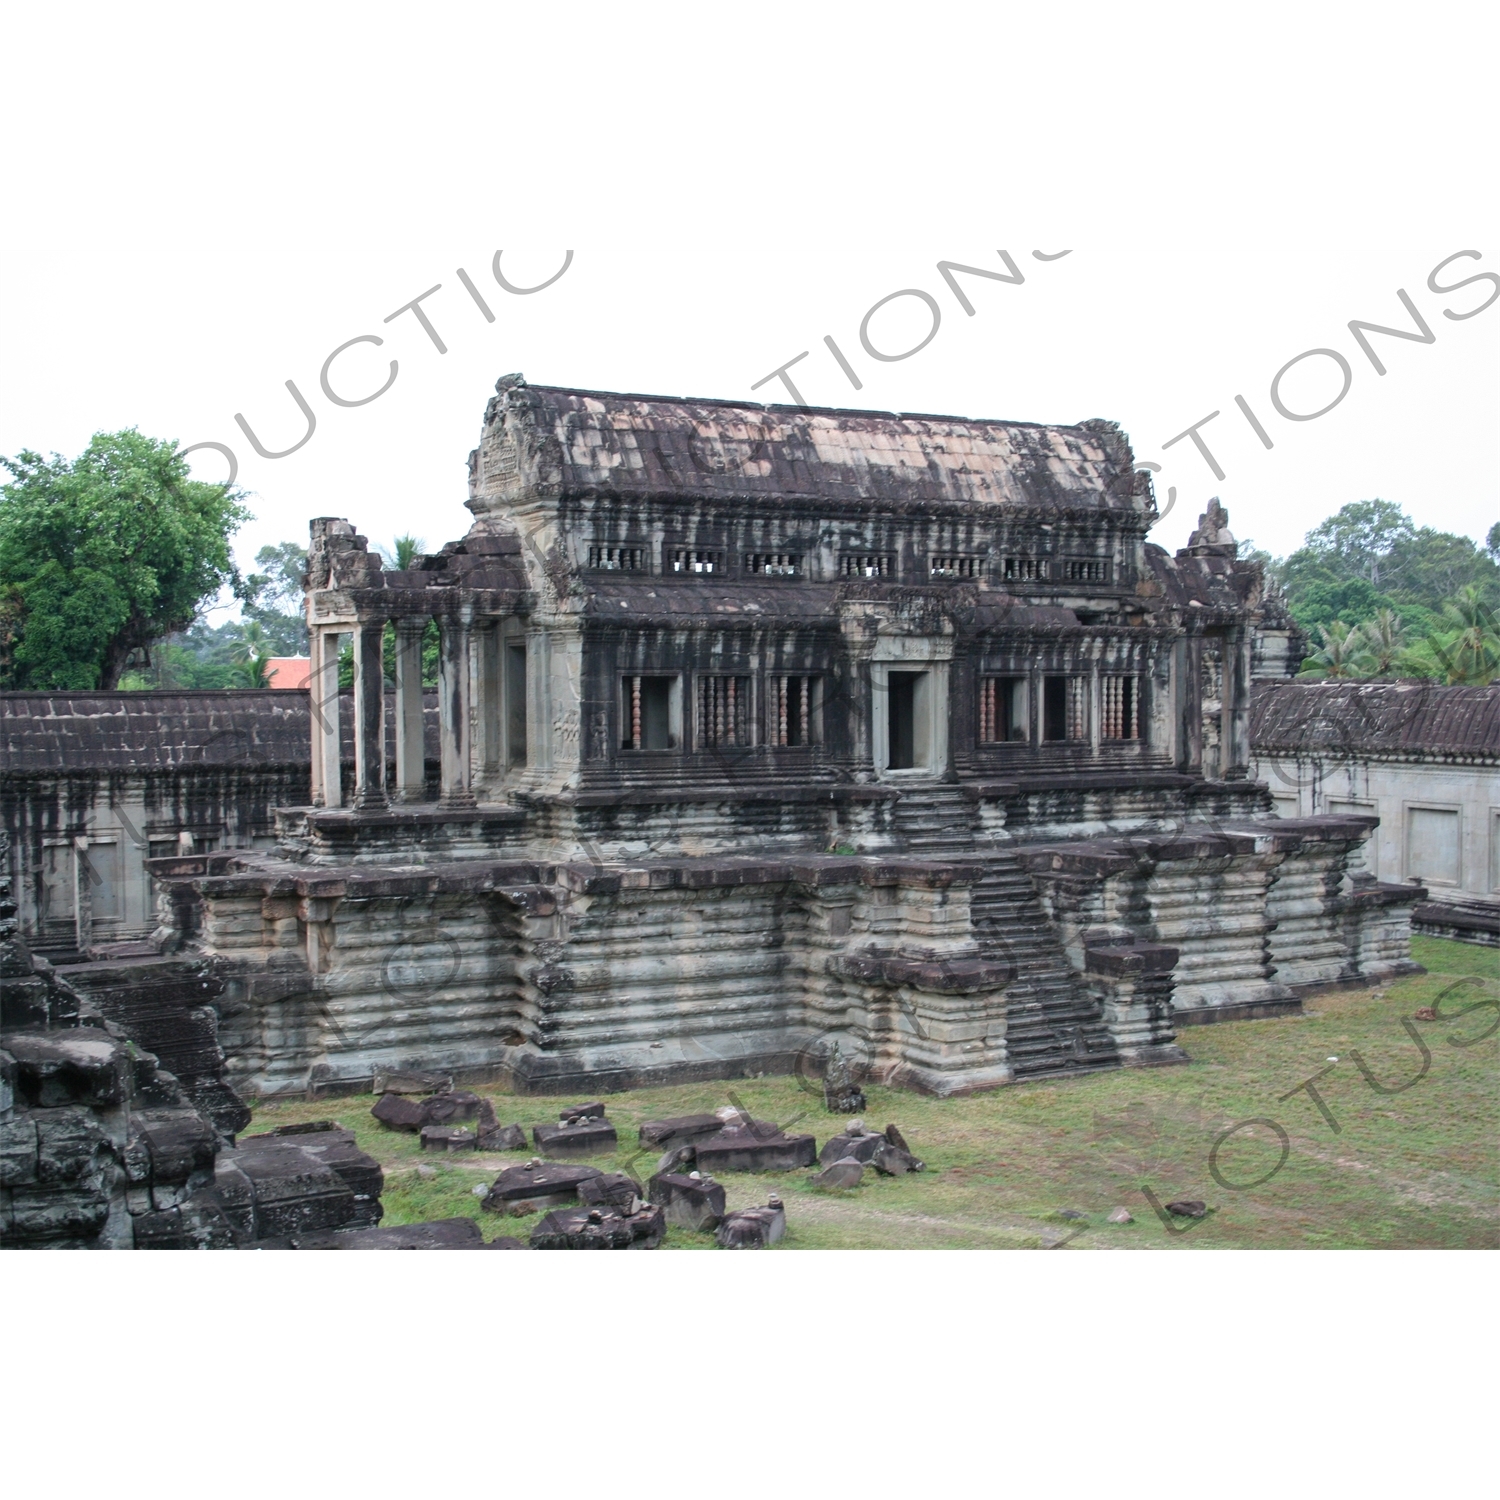 Library Building inside Angkor Wat in Angkor